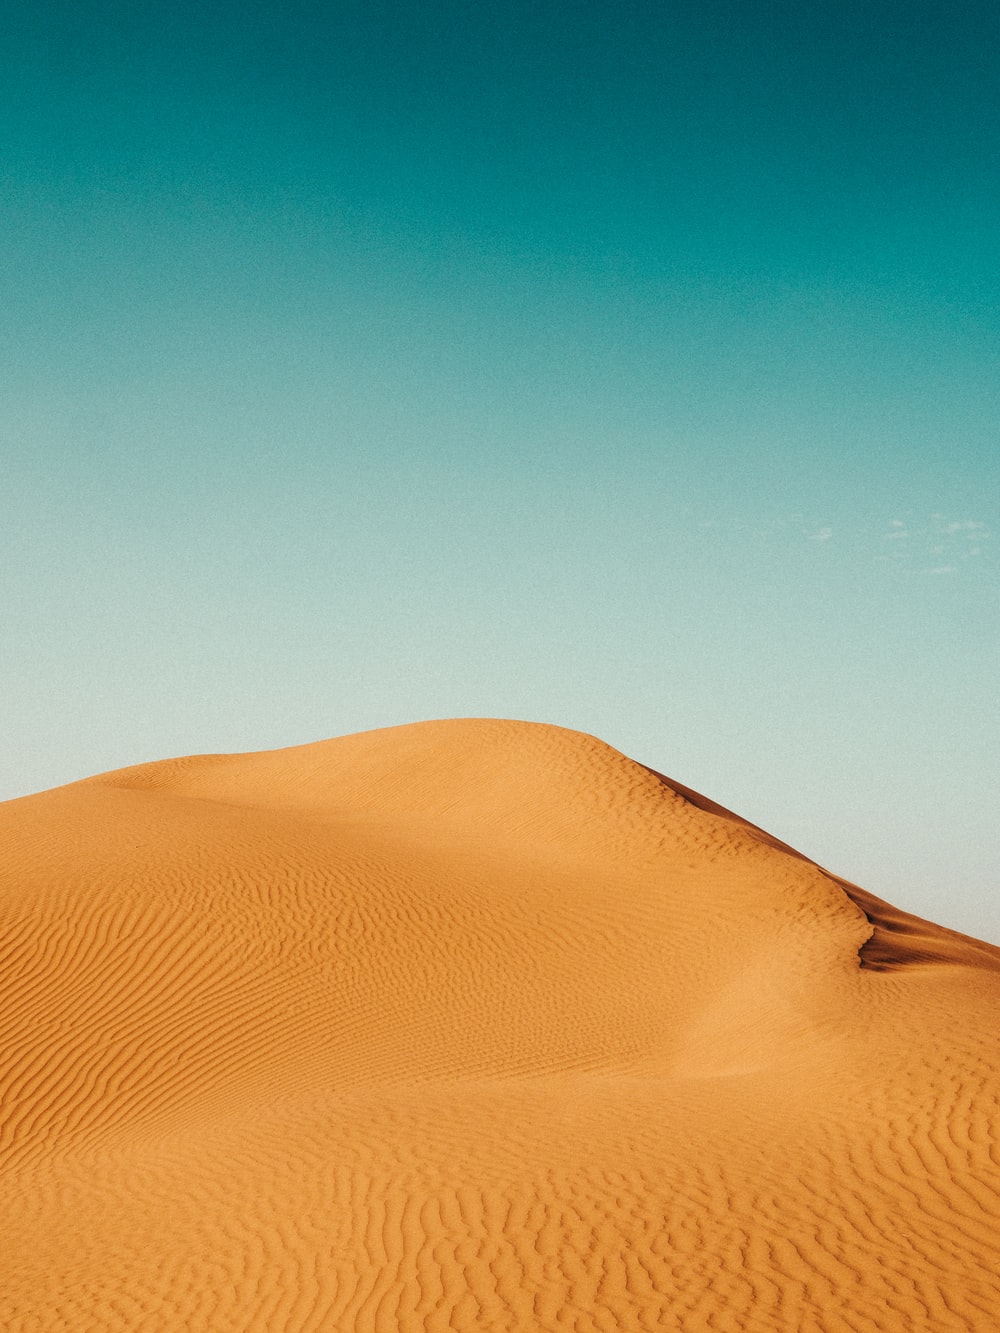 20 Free Desert Pictures Stock Photos on